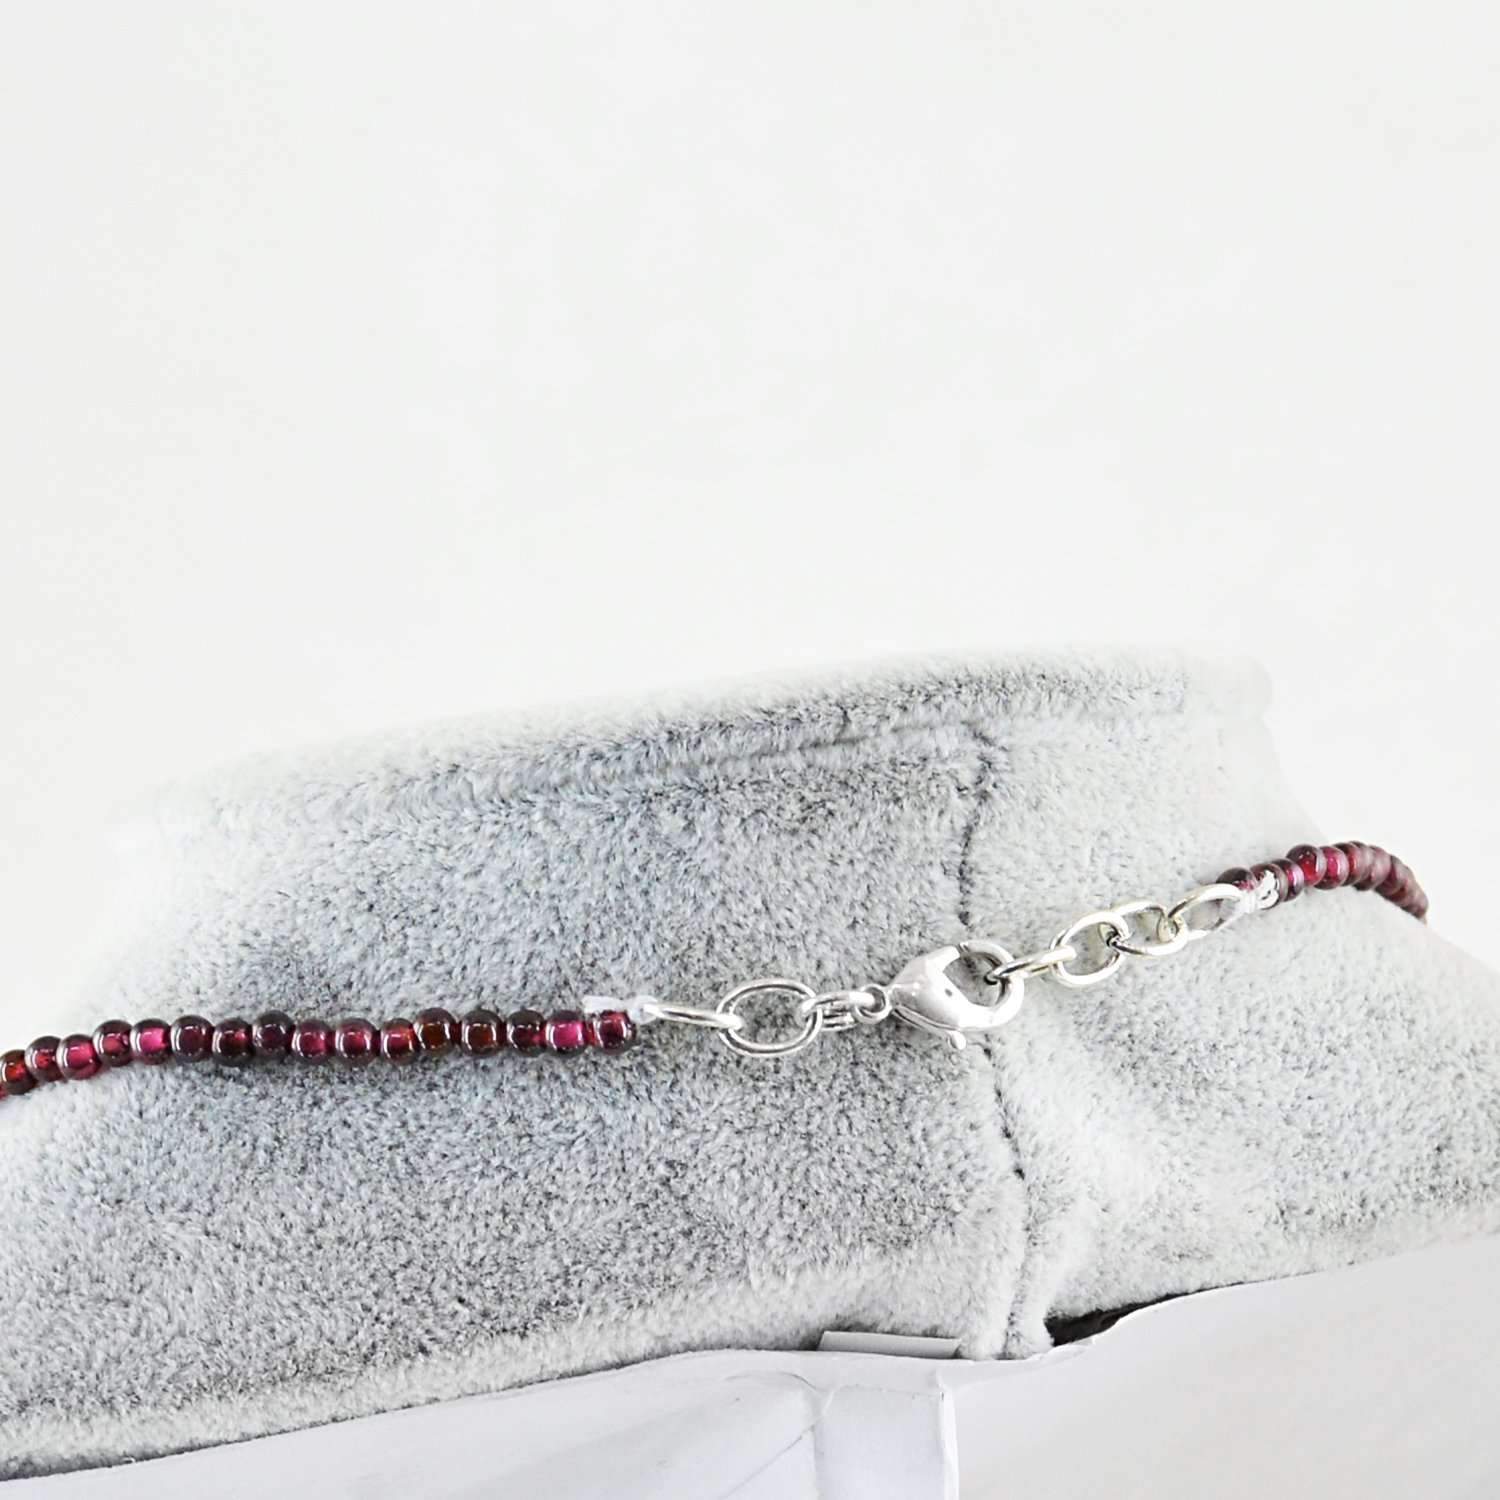 gemsmore:Round Shape Red Garnet & Rutile Quartz Necklace Natural Untreated Beads